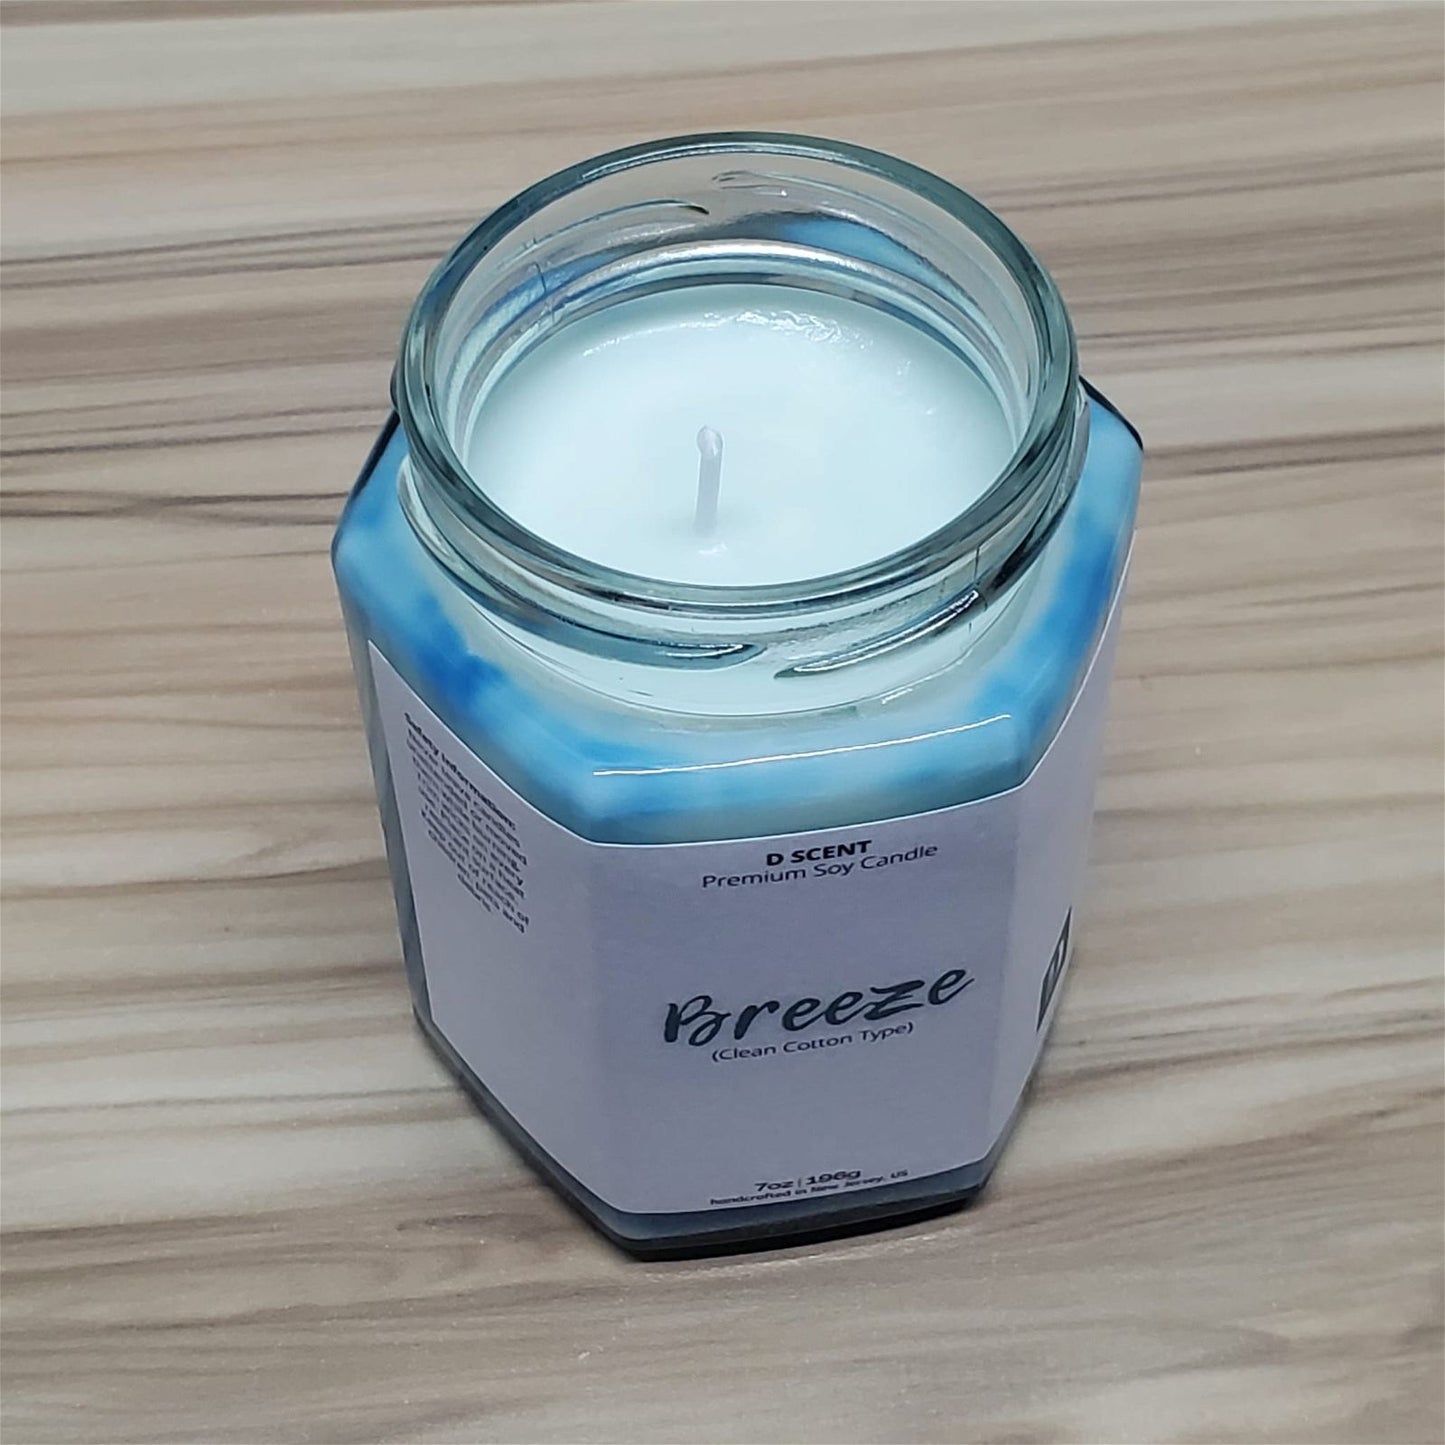 Breeze Soy Candle | Large Hex Jar - D SCENT 